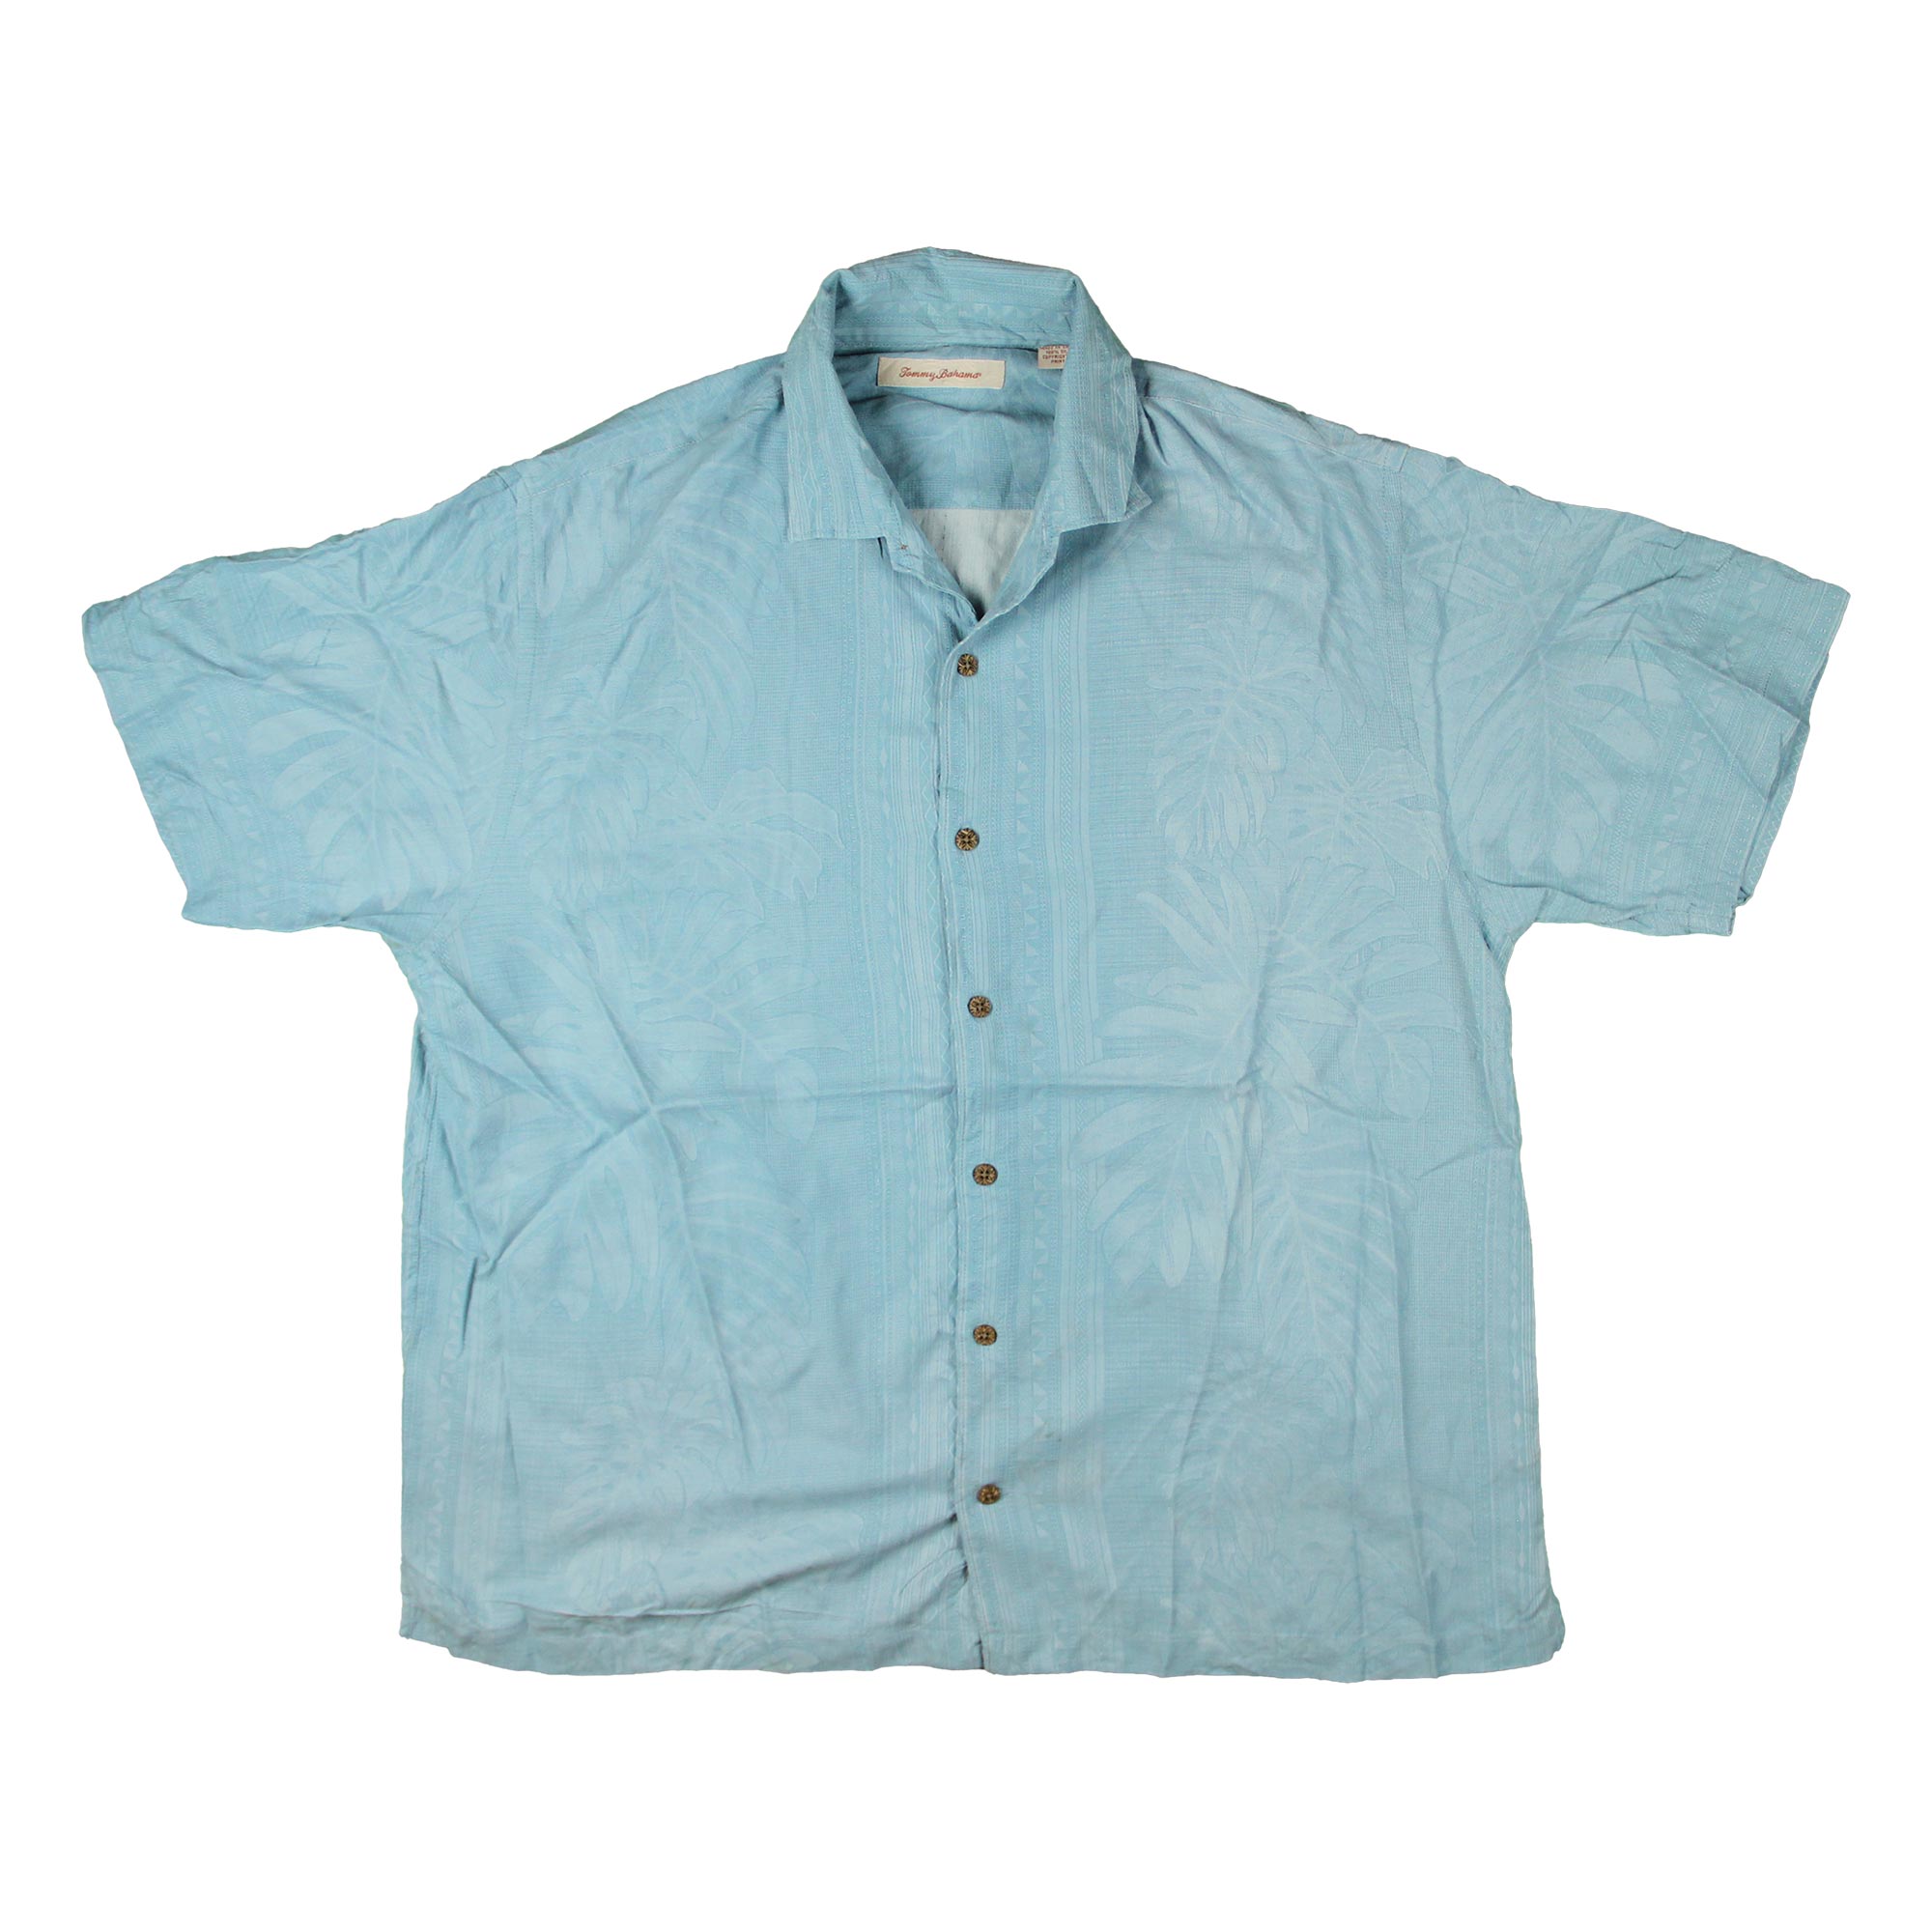 Tommy Bahama Shirt - XL